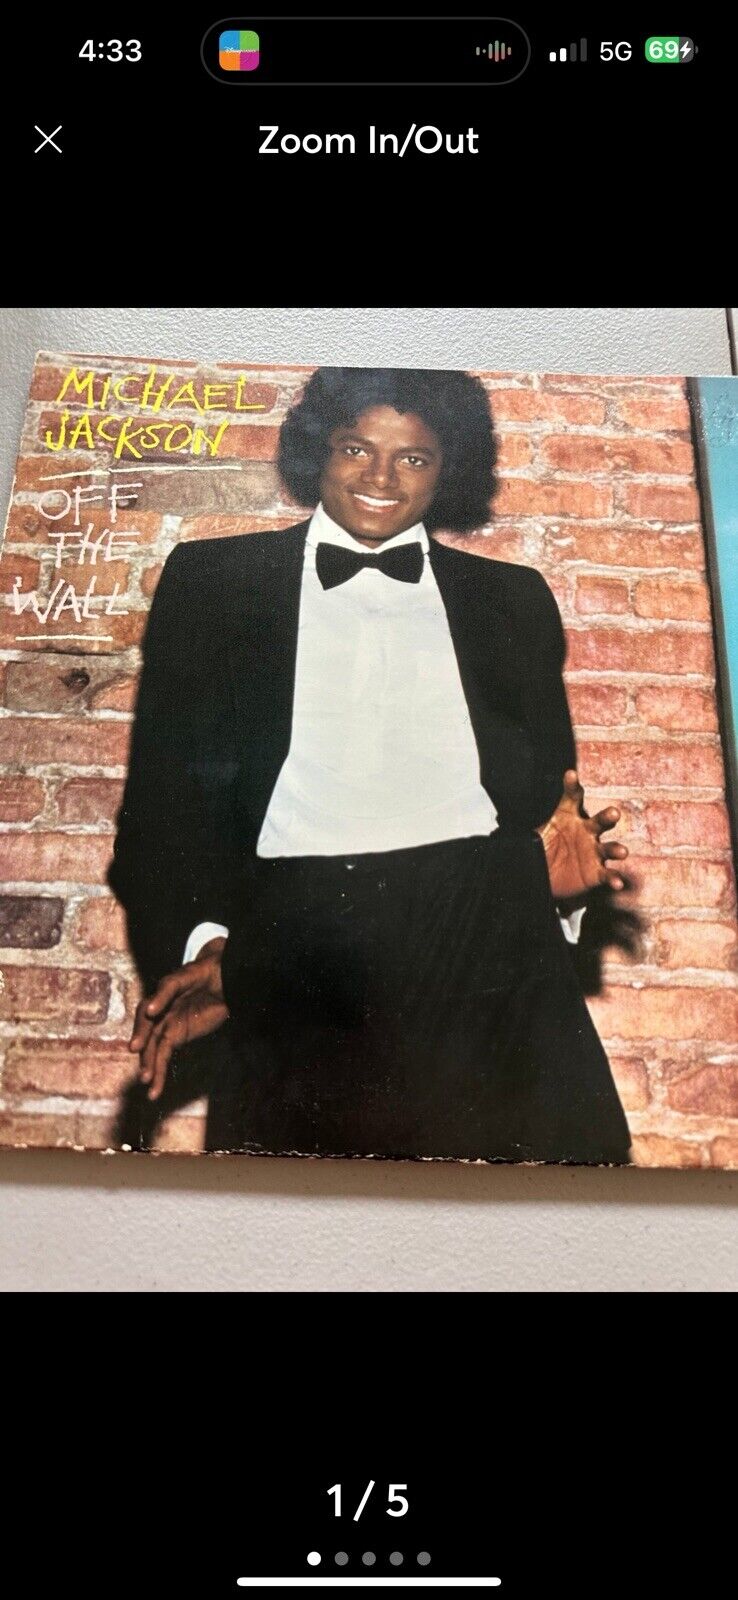 Michael Jackson Off the Wall ORIGINAL LP Vinyl  See Description